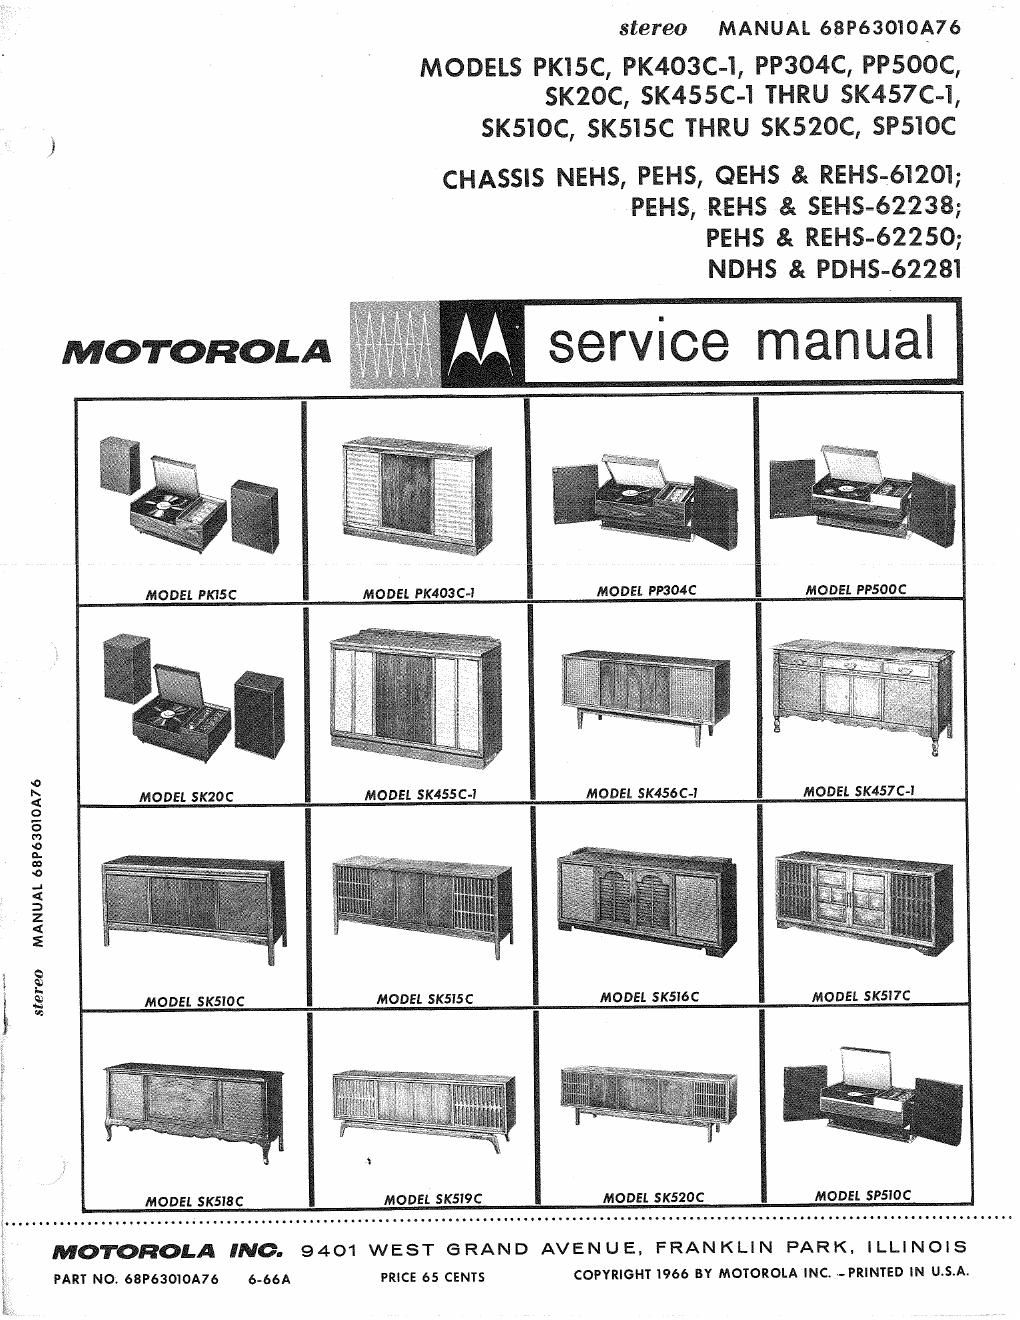 motorola sk 520 c service manual